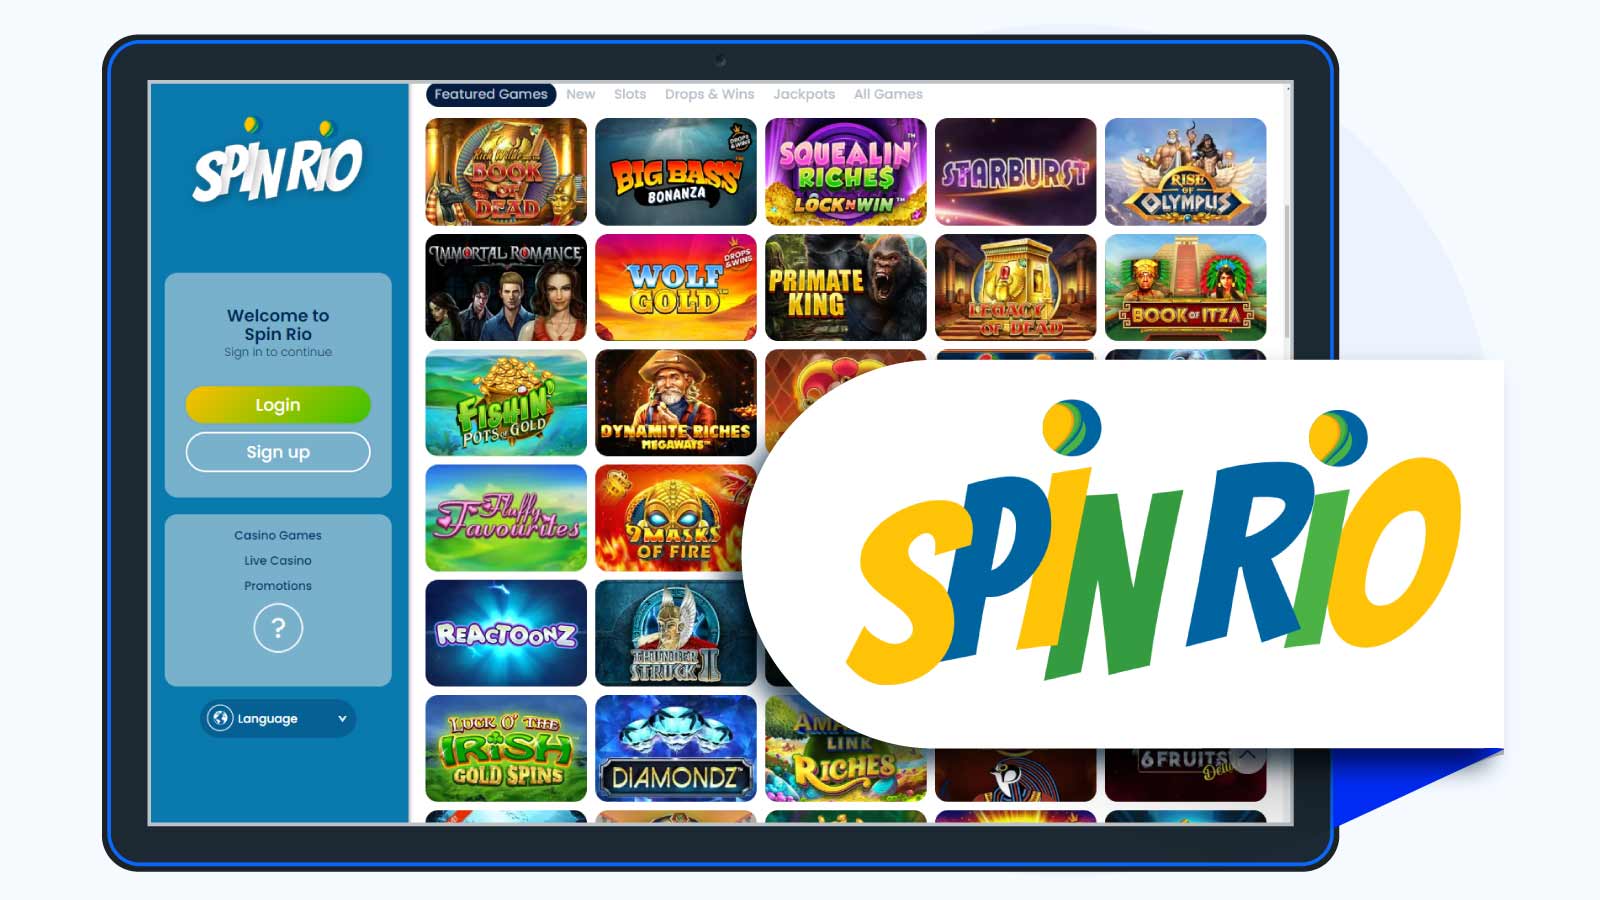 Spin Rio Casino – Helpful & Organized Rubrics